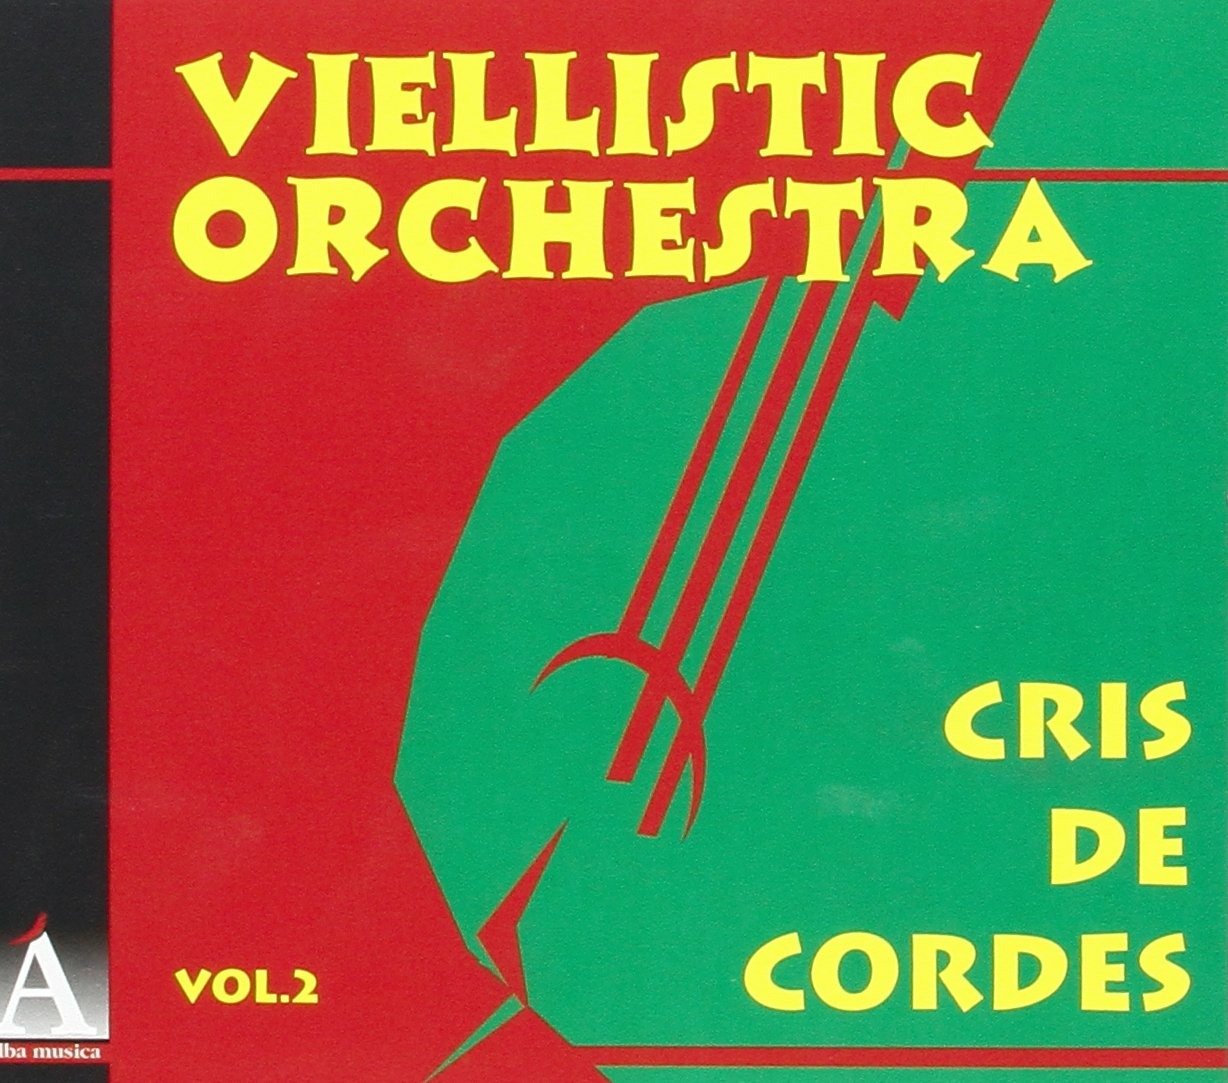 CD Shop - VIELLISTIC ORCHESTRA CRIS DE CORDES